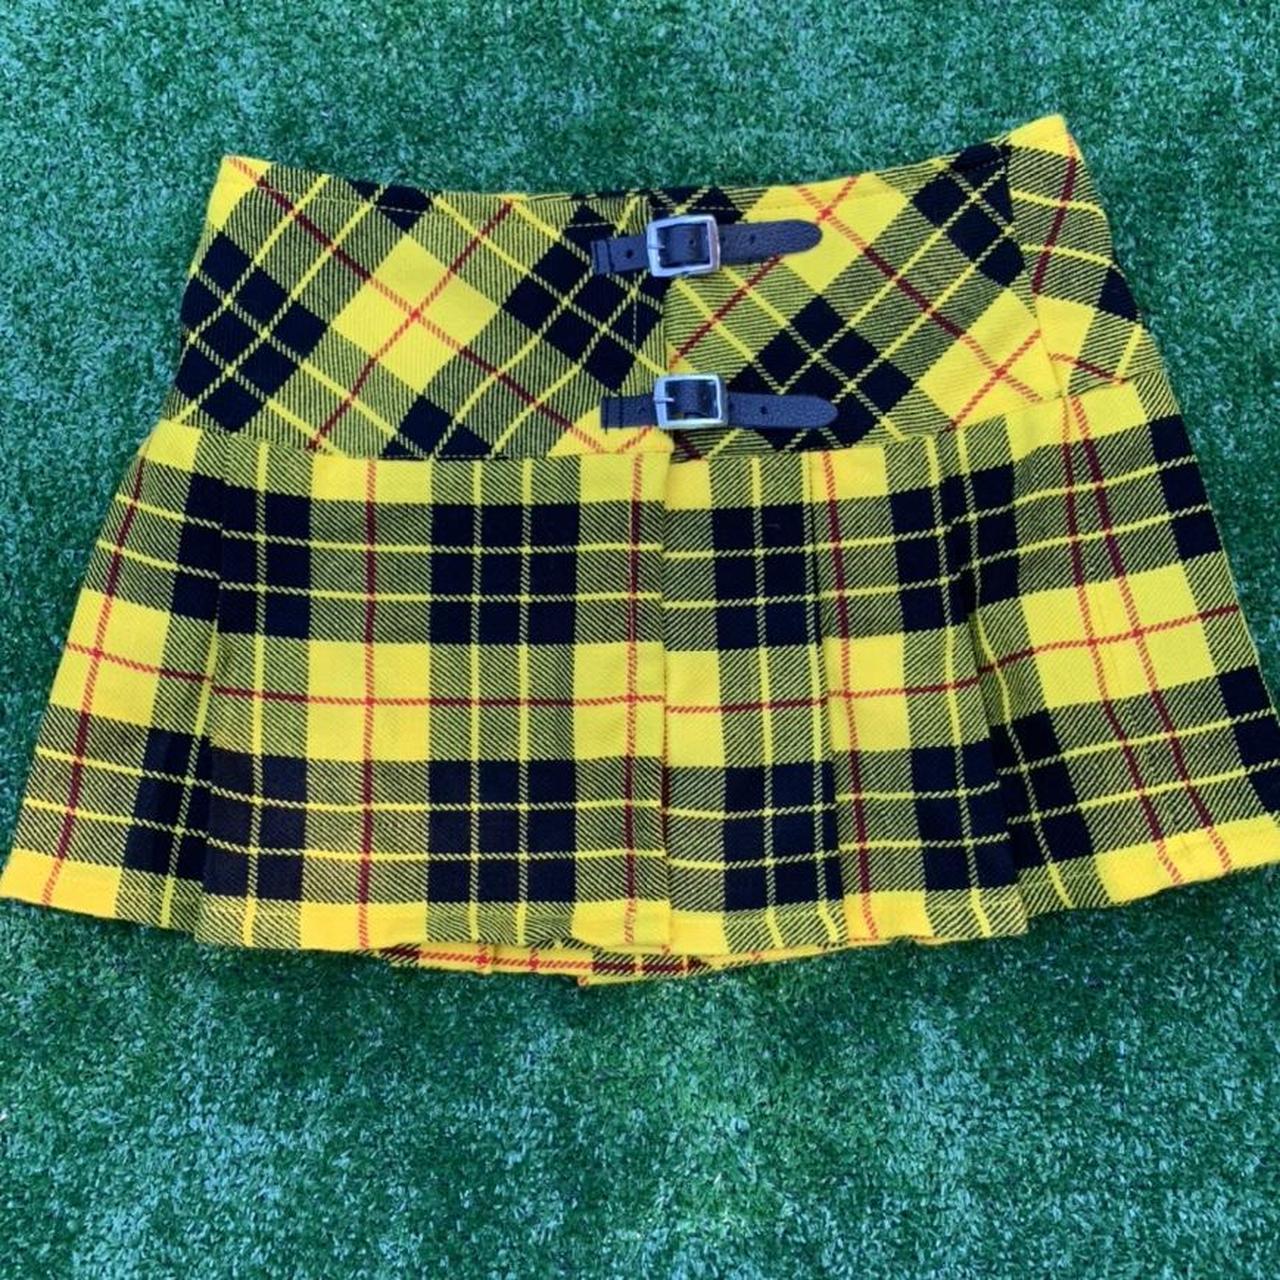 Product Image 1 - Yellow mini skirt 
Plaid /